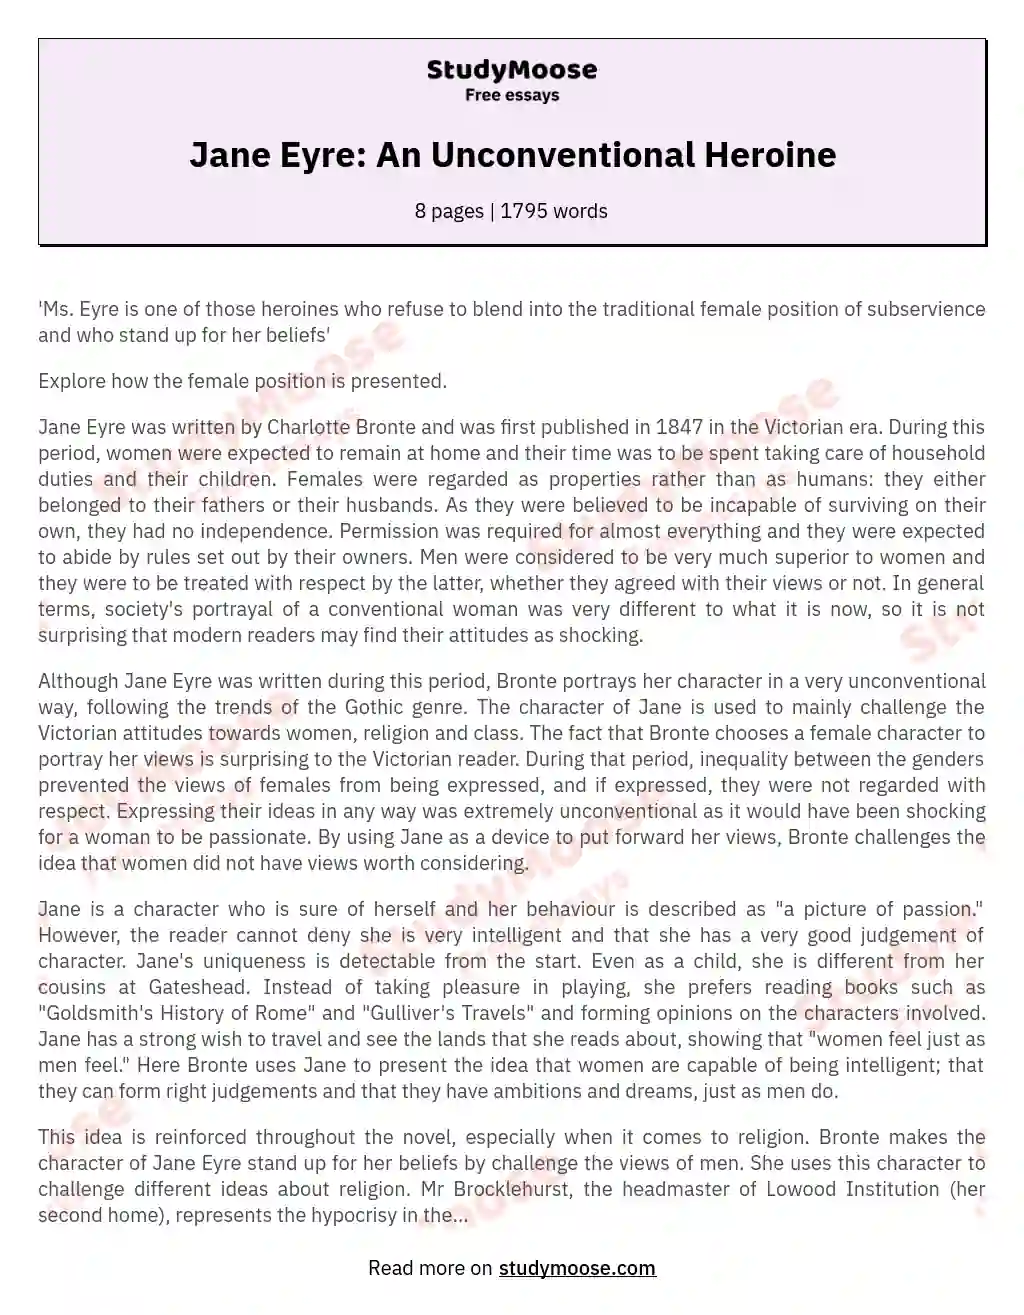 Jane Eyre: An Unconventional Heroine essay